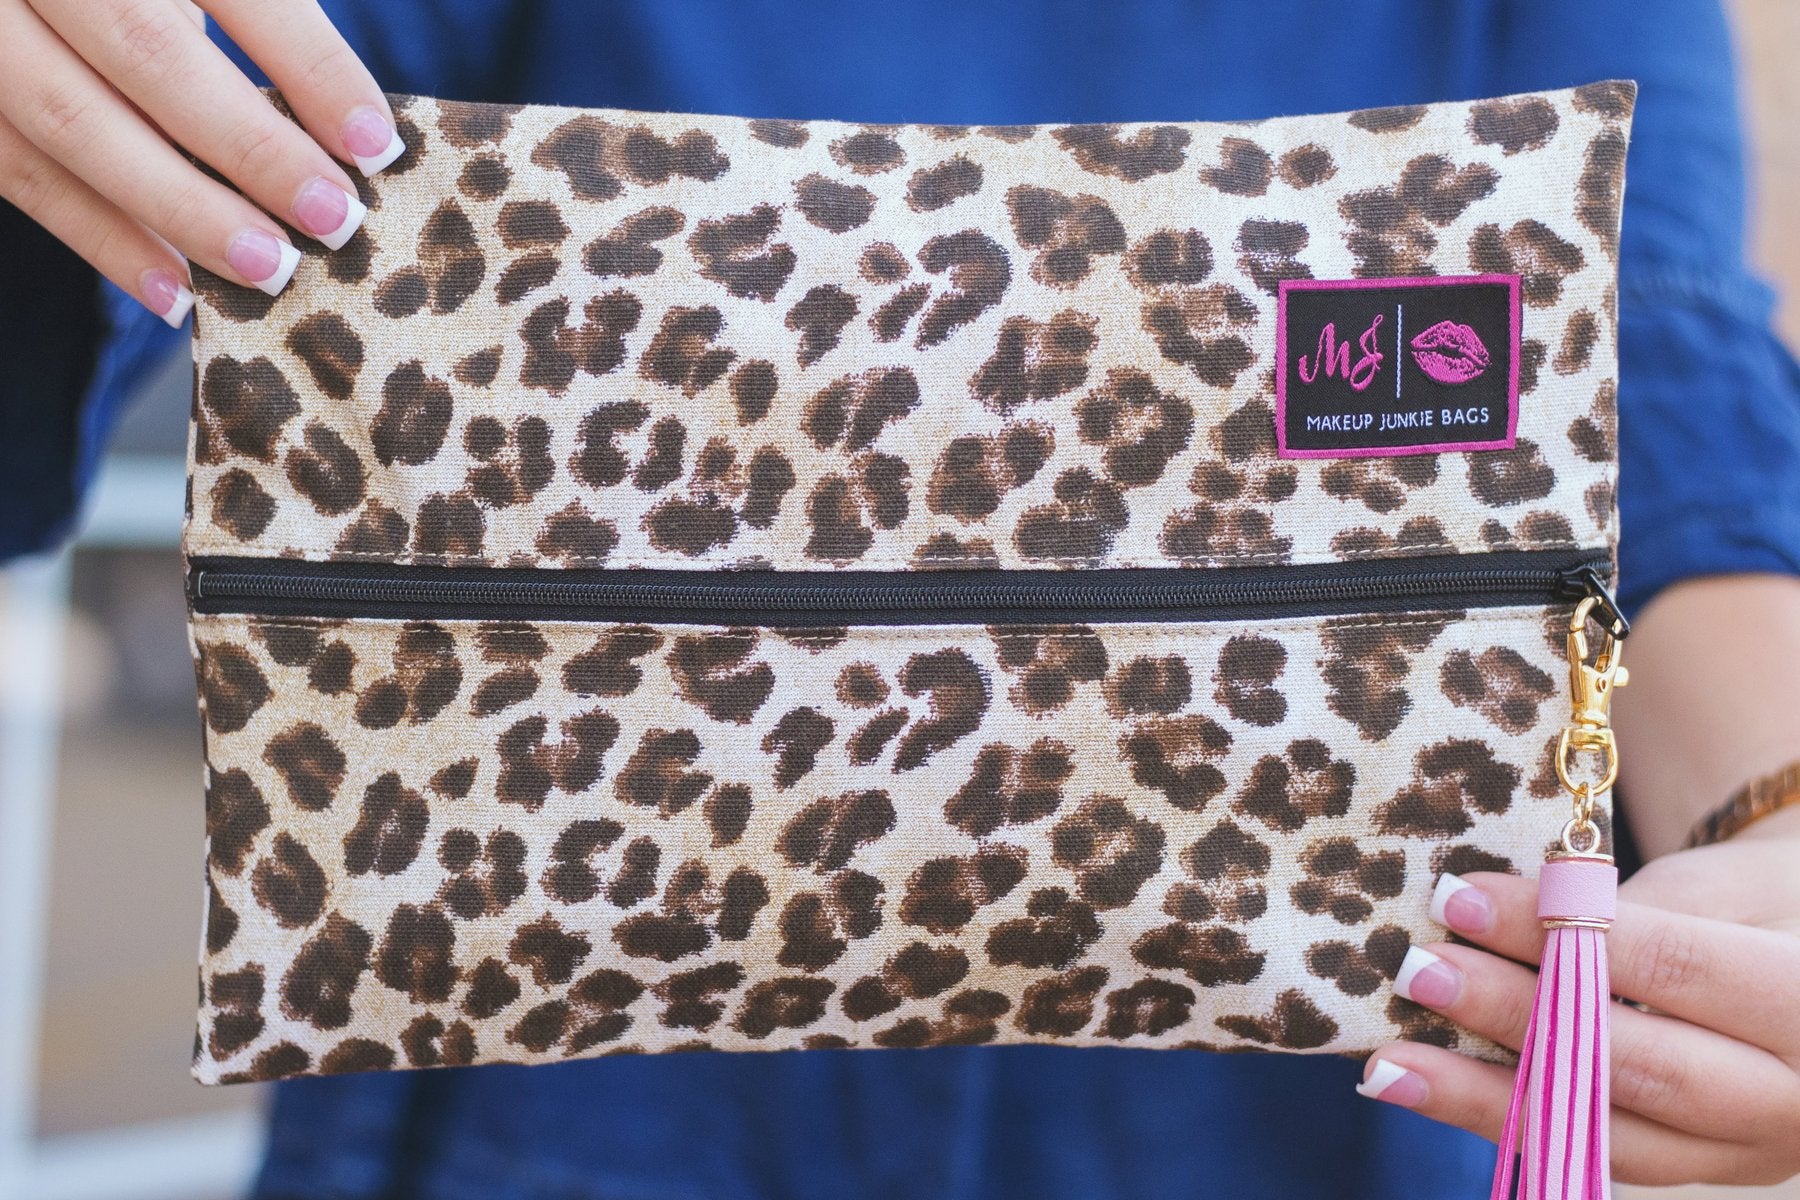 savannah leopard cheetah makeup junkie bags